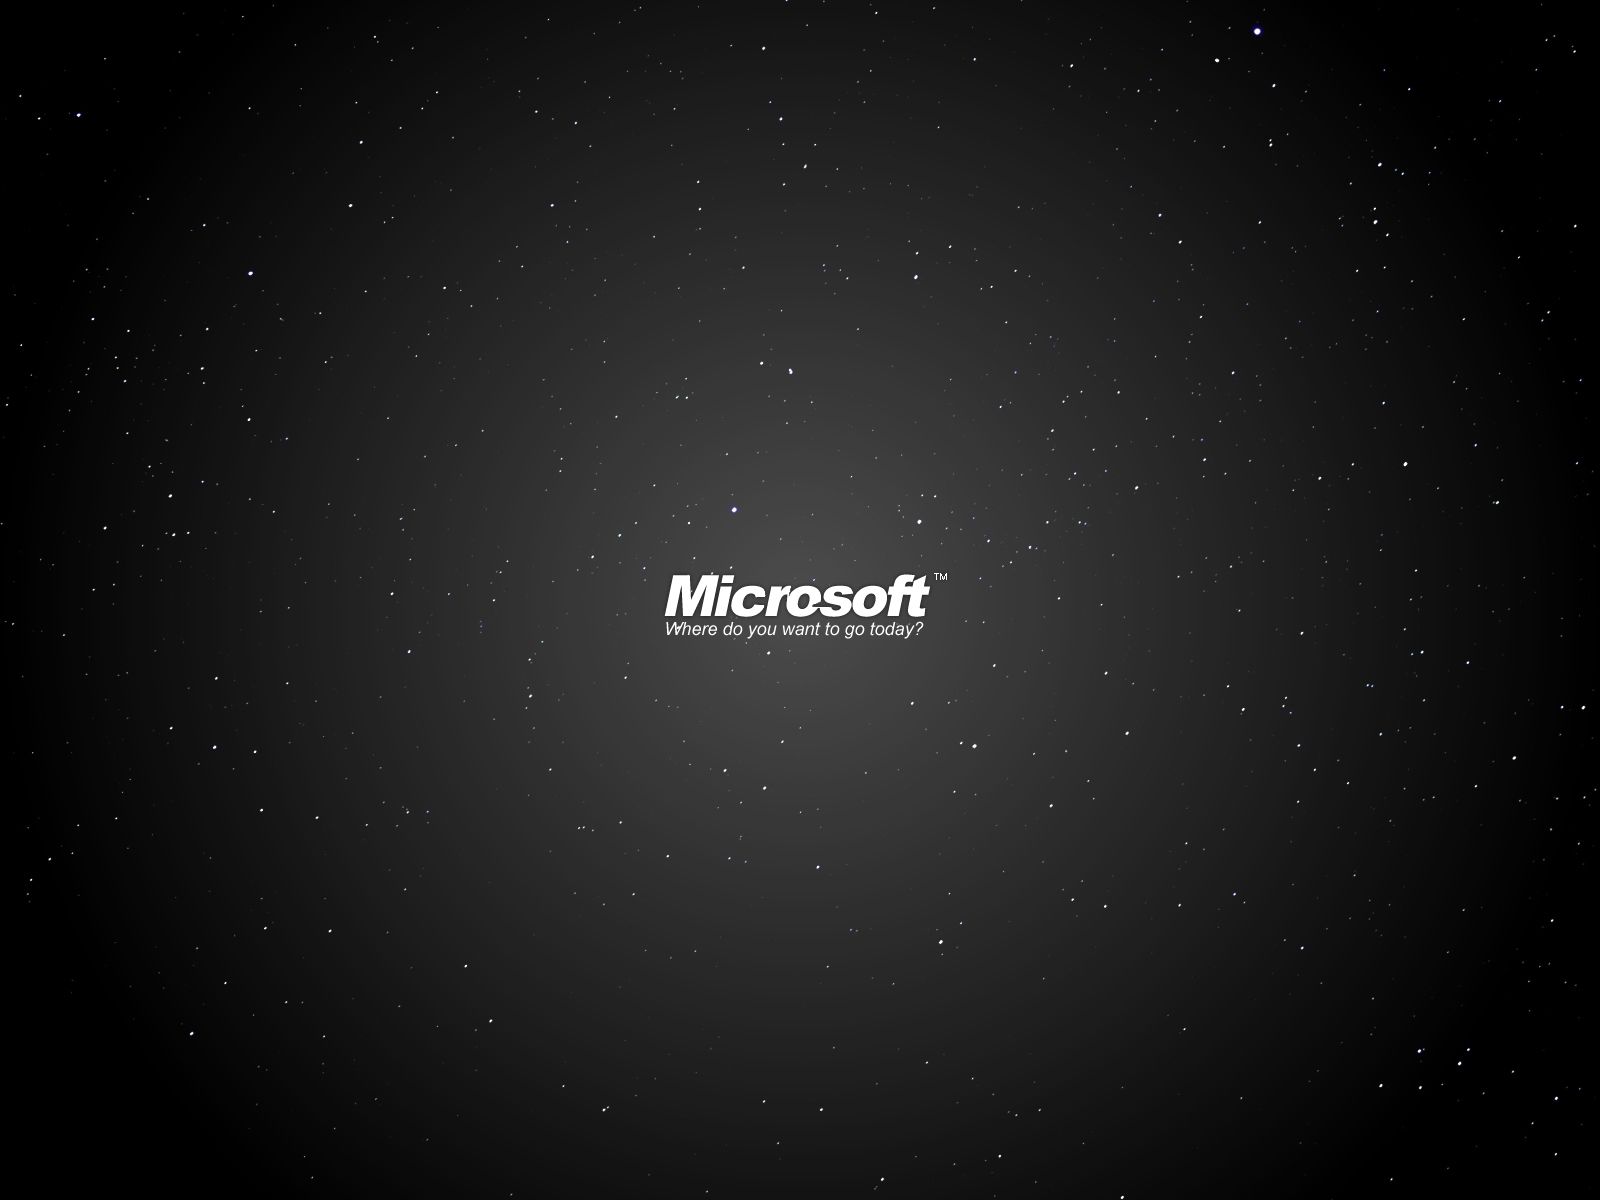 Free-Microsoft-Desktop-Wallpaper.jpg